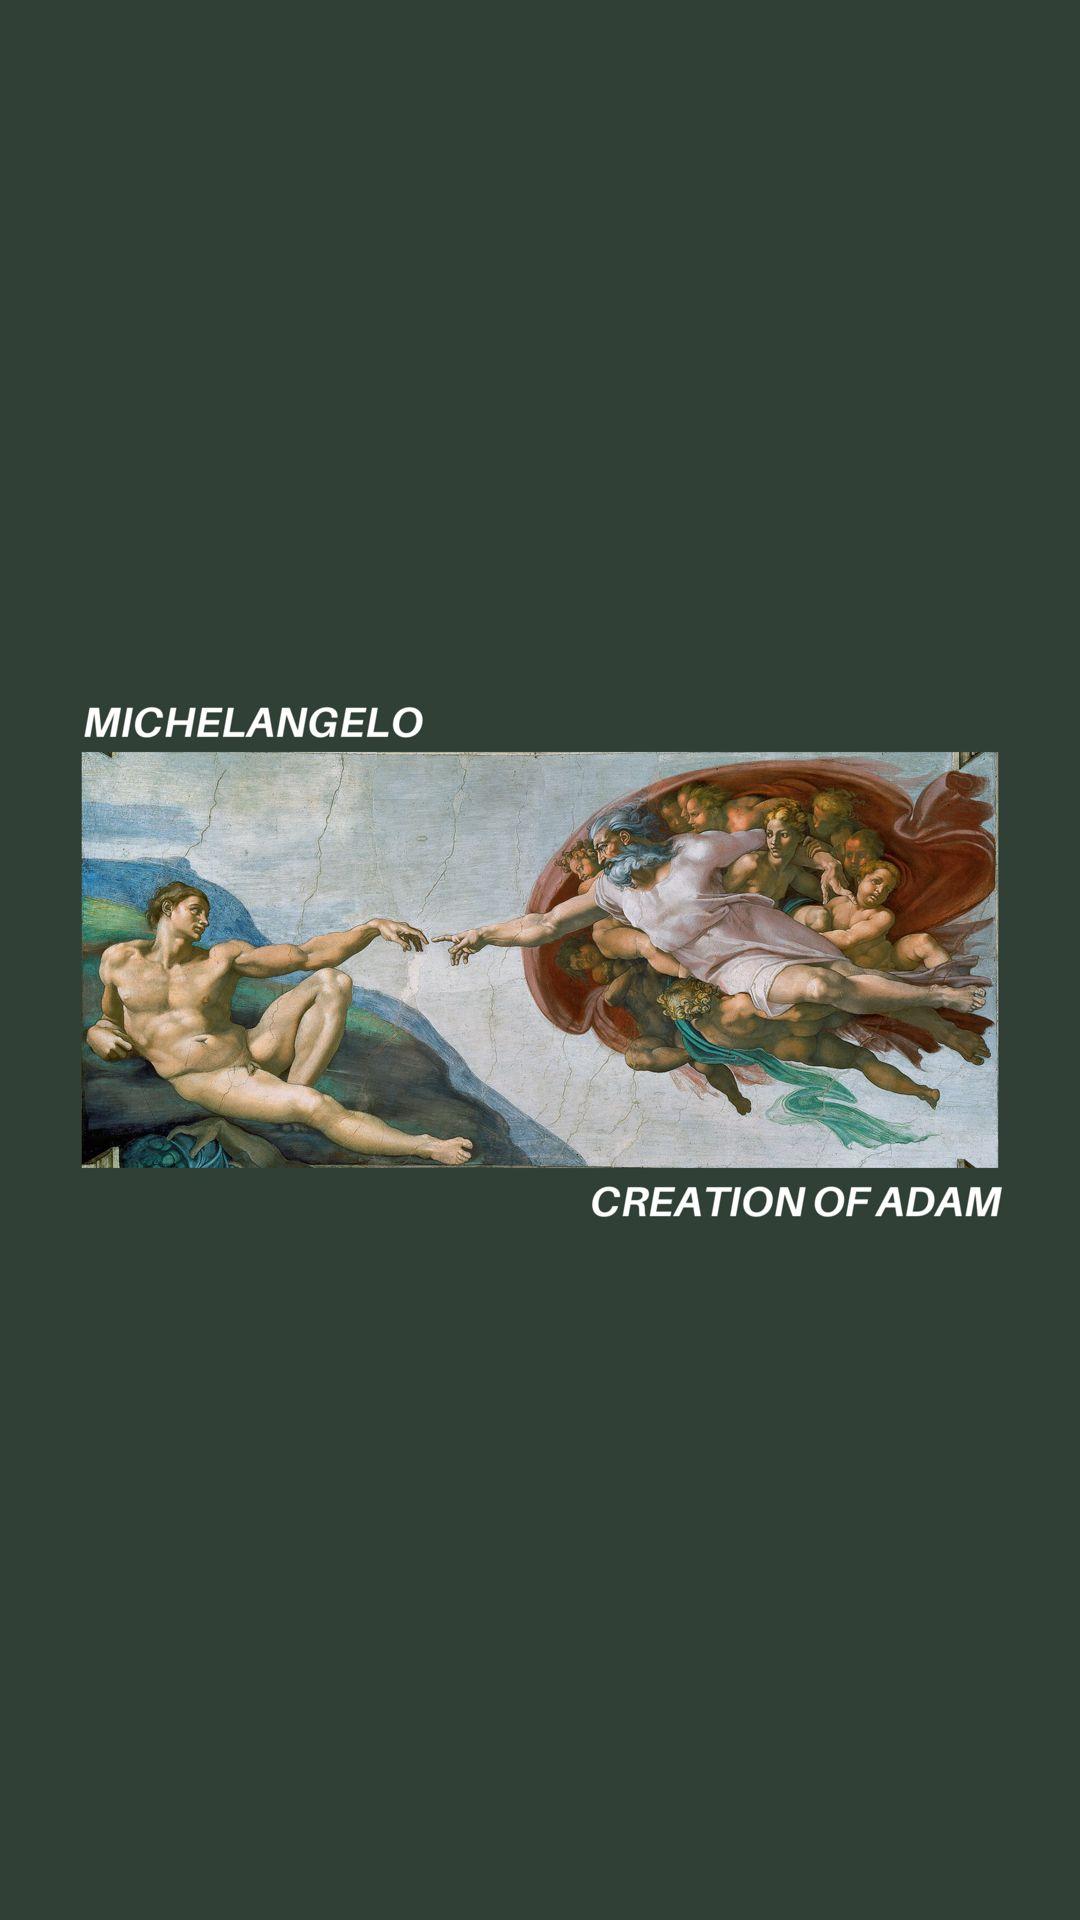 Michelangelo wallpaper art hoe aesthetic tumblr iPhone phone